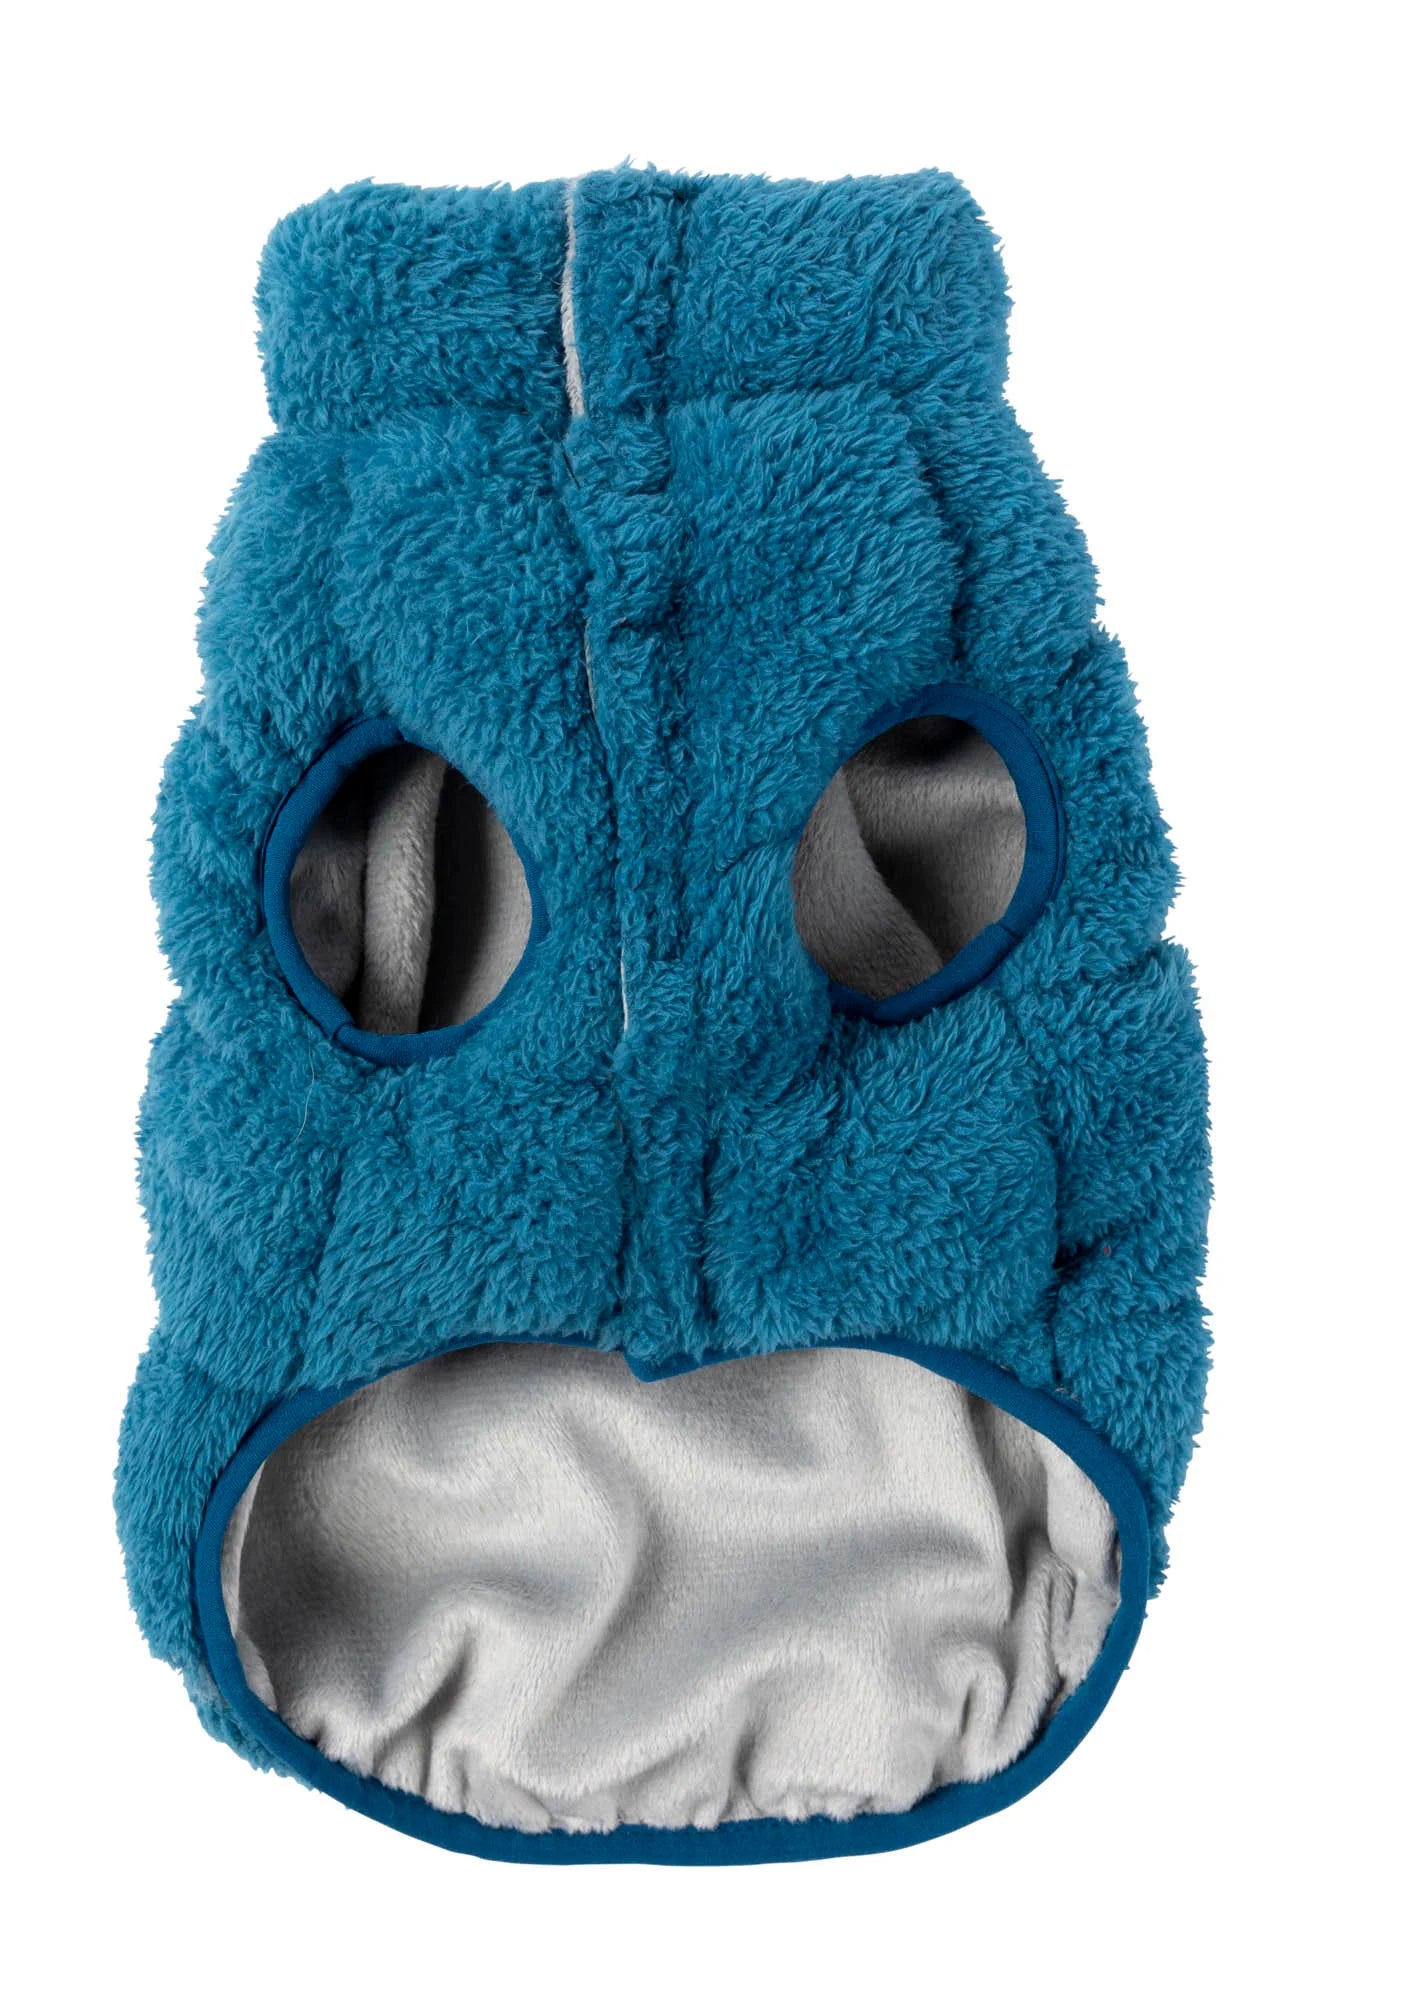 Teddy Bear Vaucluse Blue Jacket by Fuzzyard